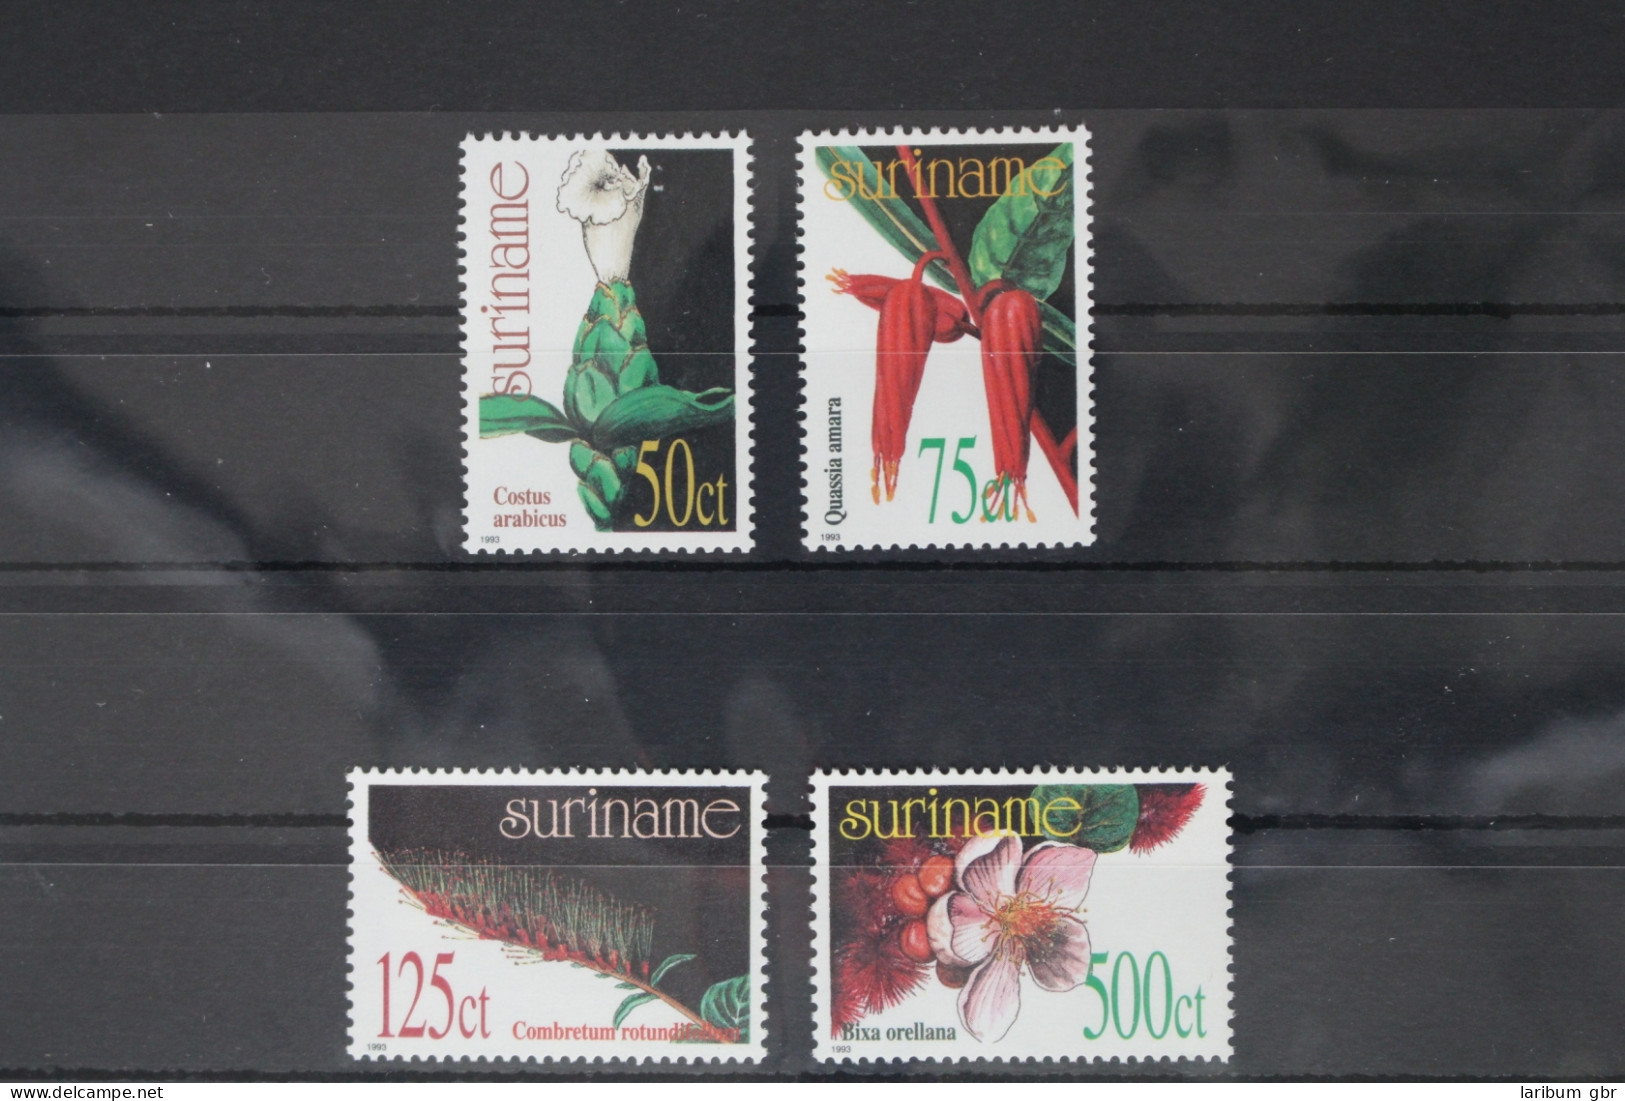 Suriname 1431-1434 Postfrisch #UV351 - Suriname